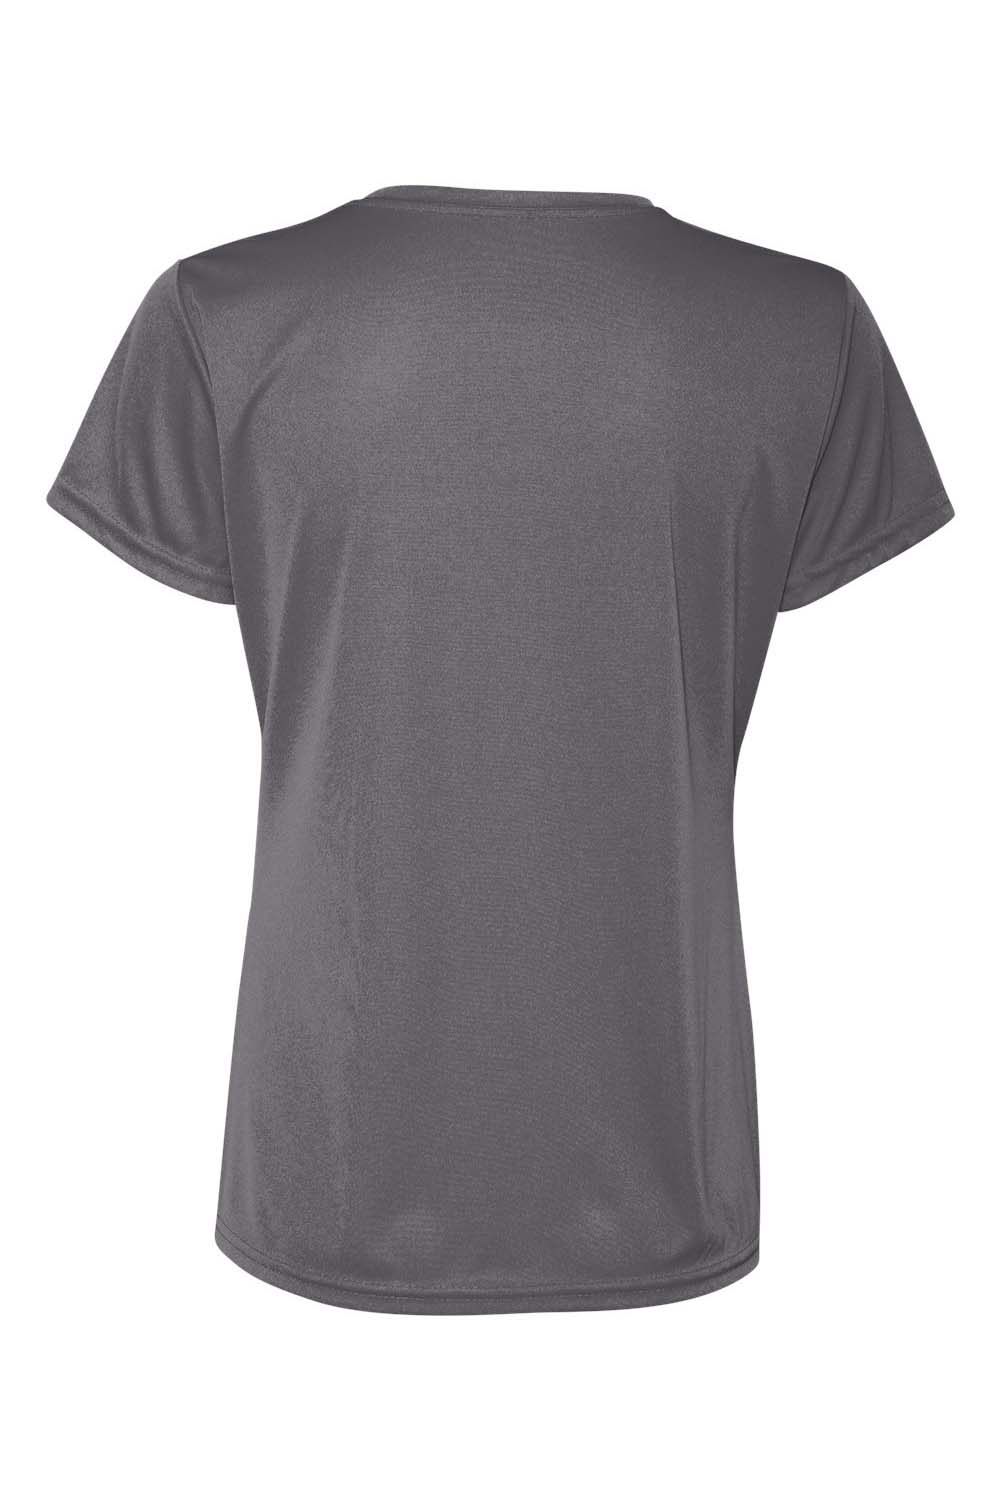 Augusta Sportswear 1790 Womens Moisture Wicking Short Sleeve V-Neck T-Shirt Graphite Grey Model Flat Back